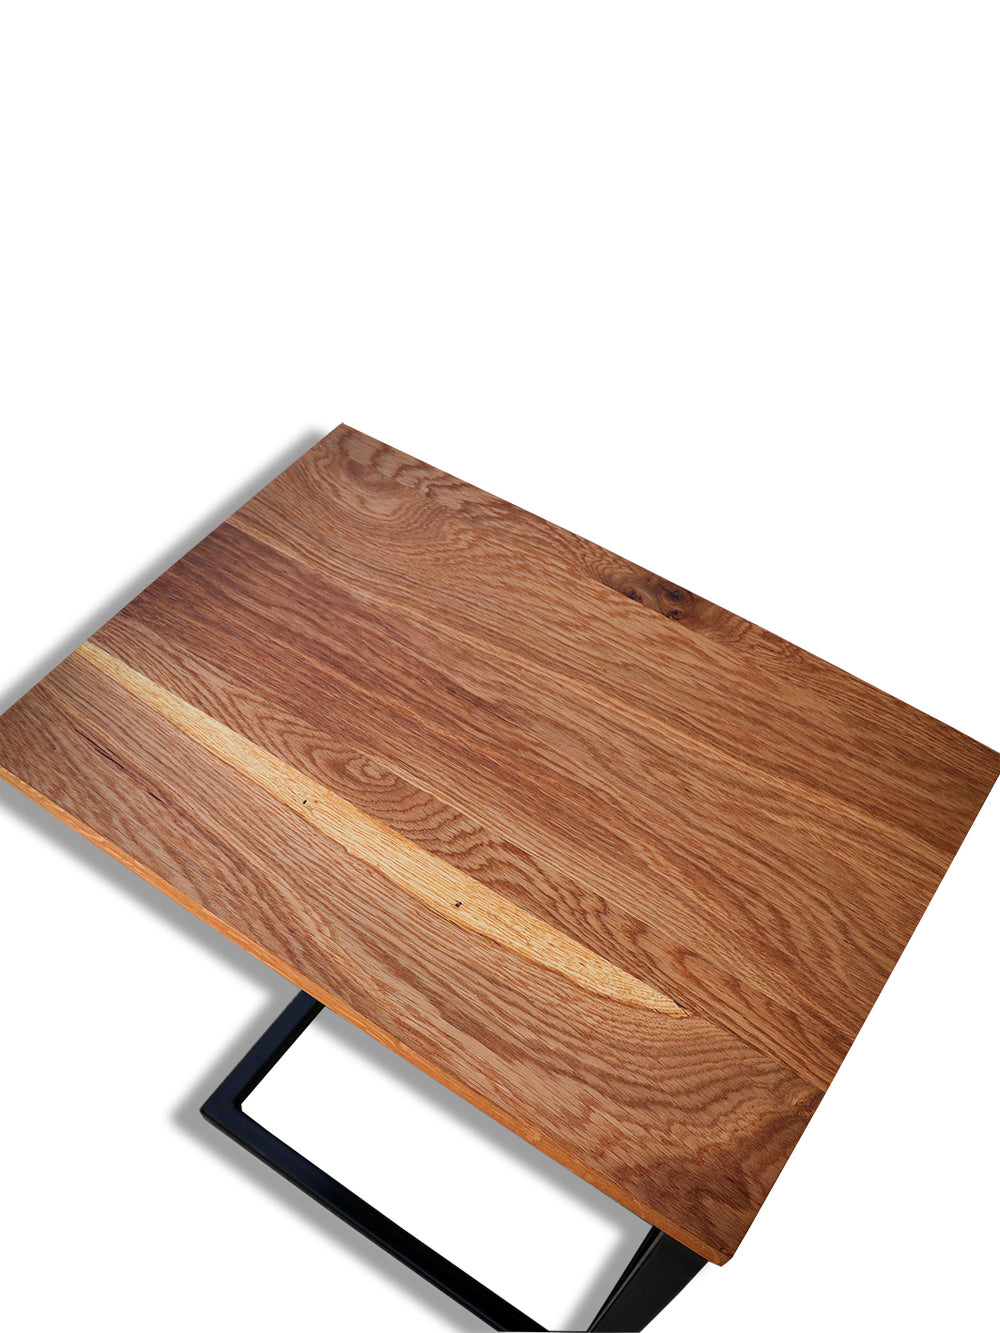 White Oak Modern Side C Table Earthly Comfort Side Tables ECH798-1